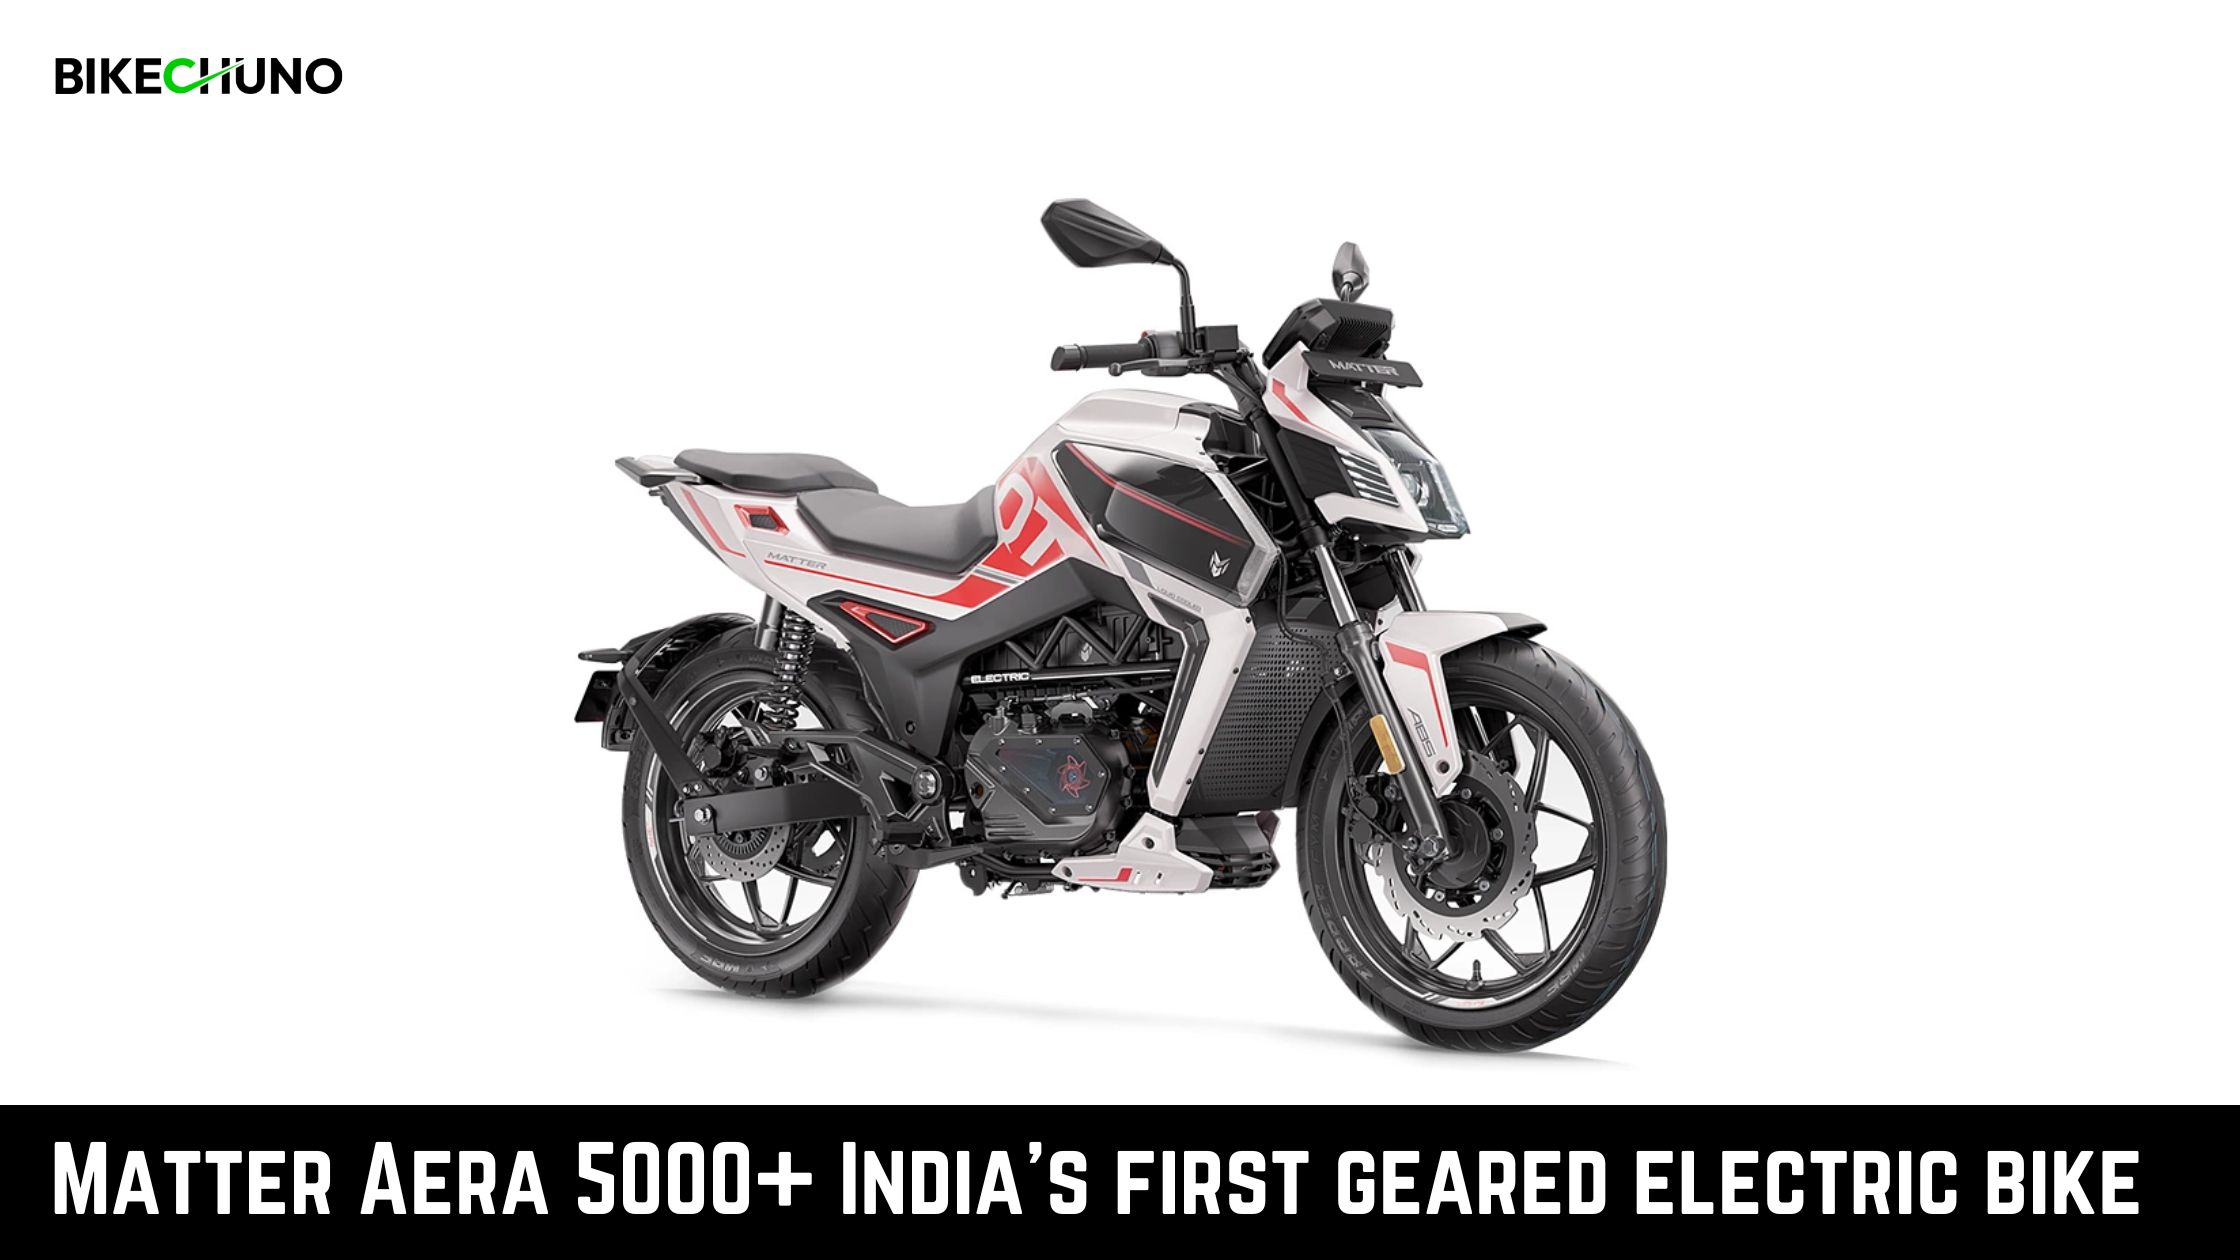 Matter Aera 5000+ India's first geared electric bike